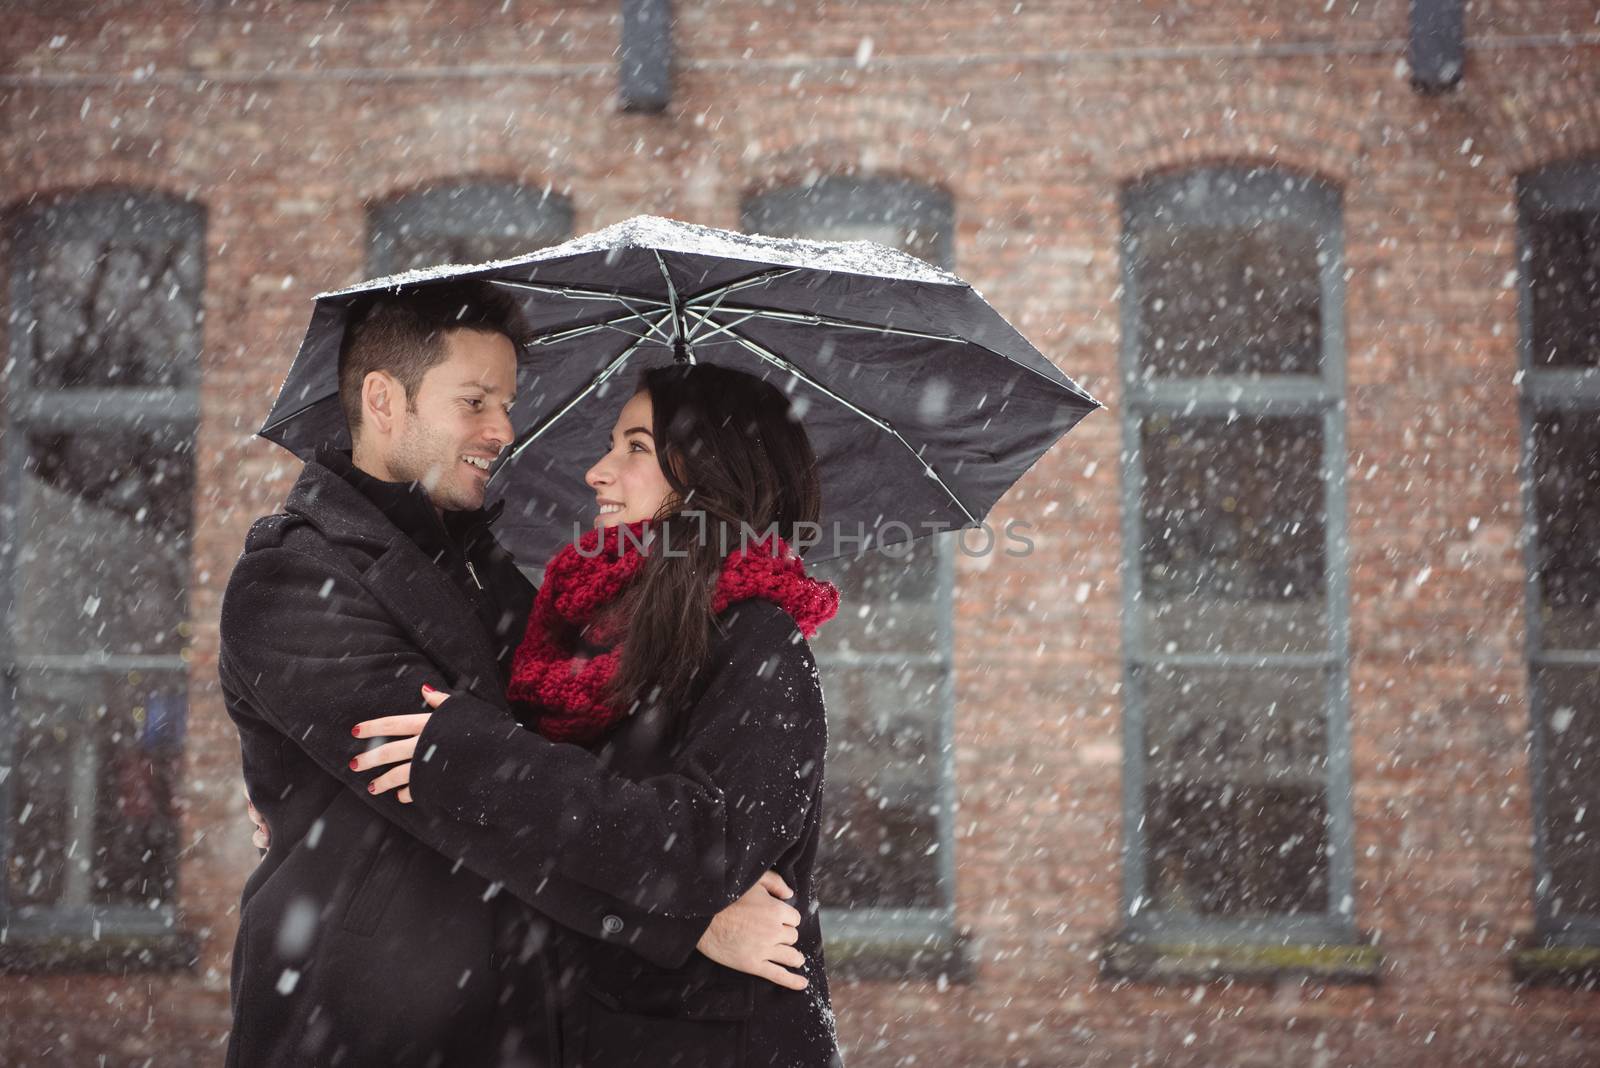 Romantic couple embracing during snowfall